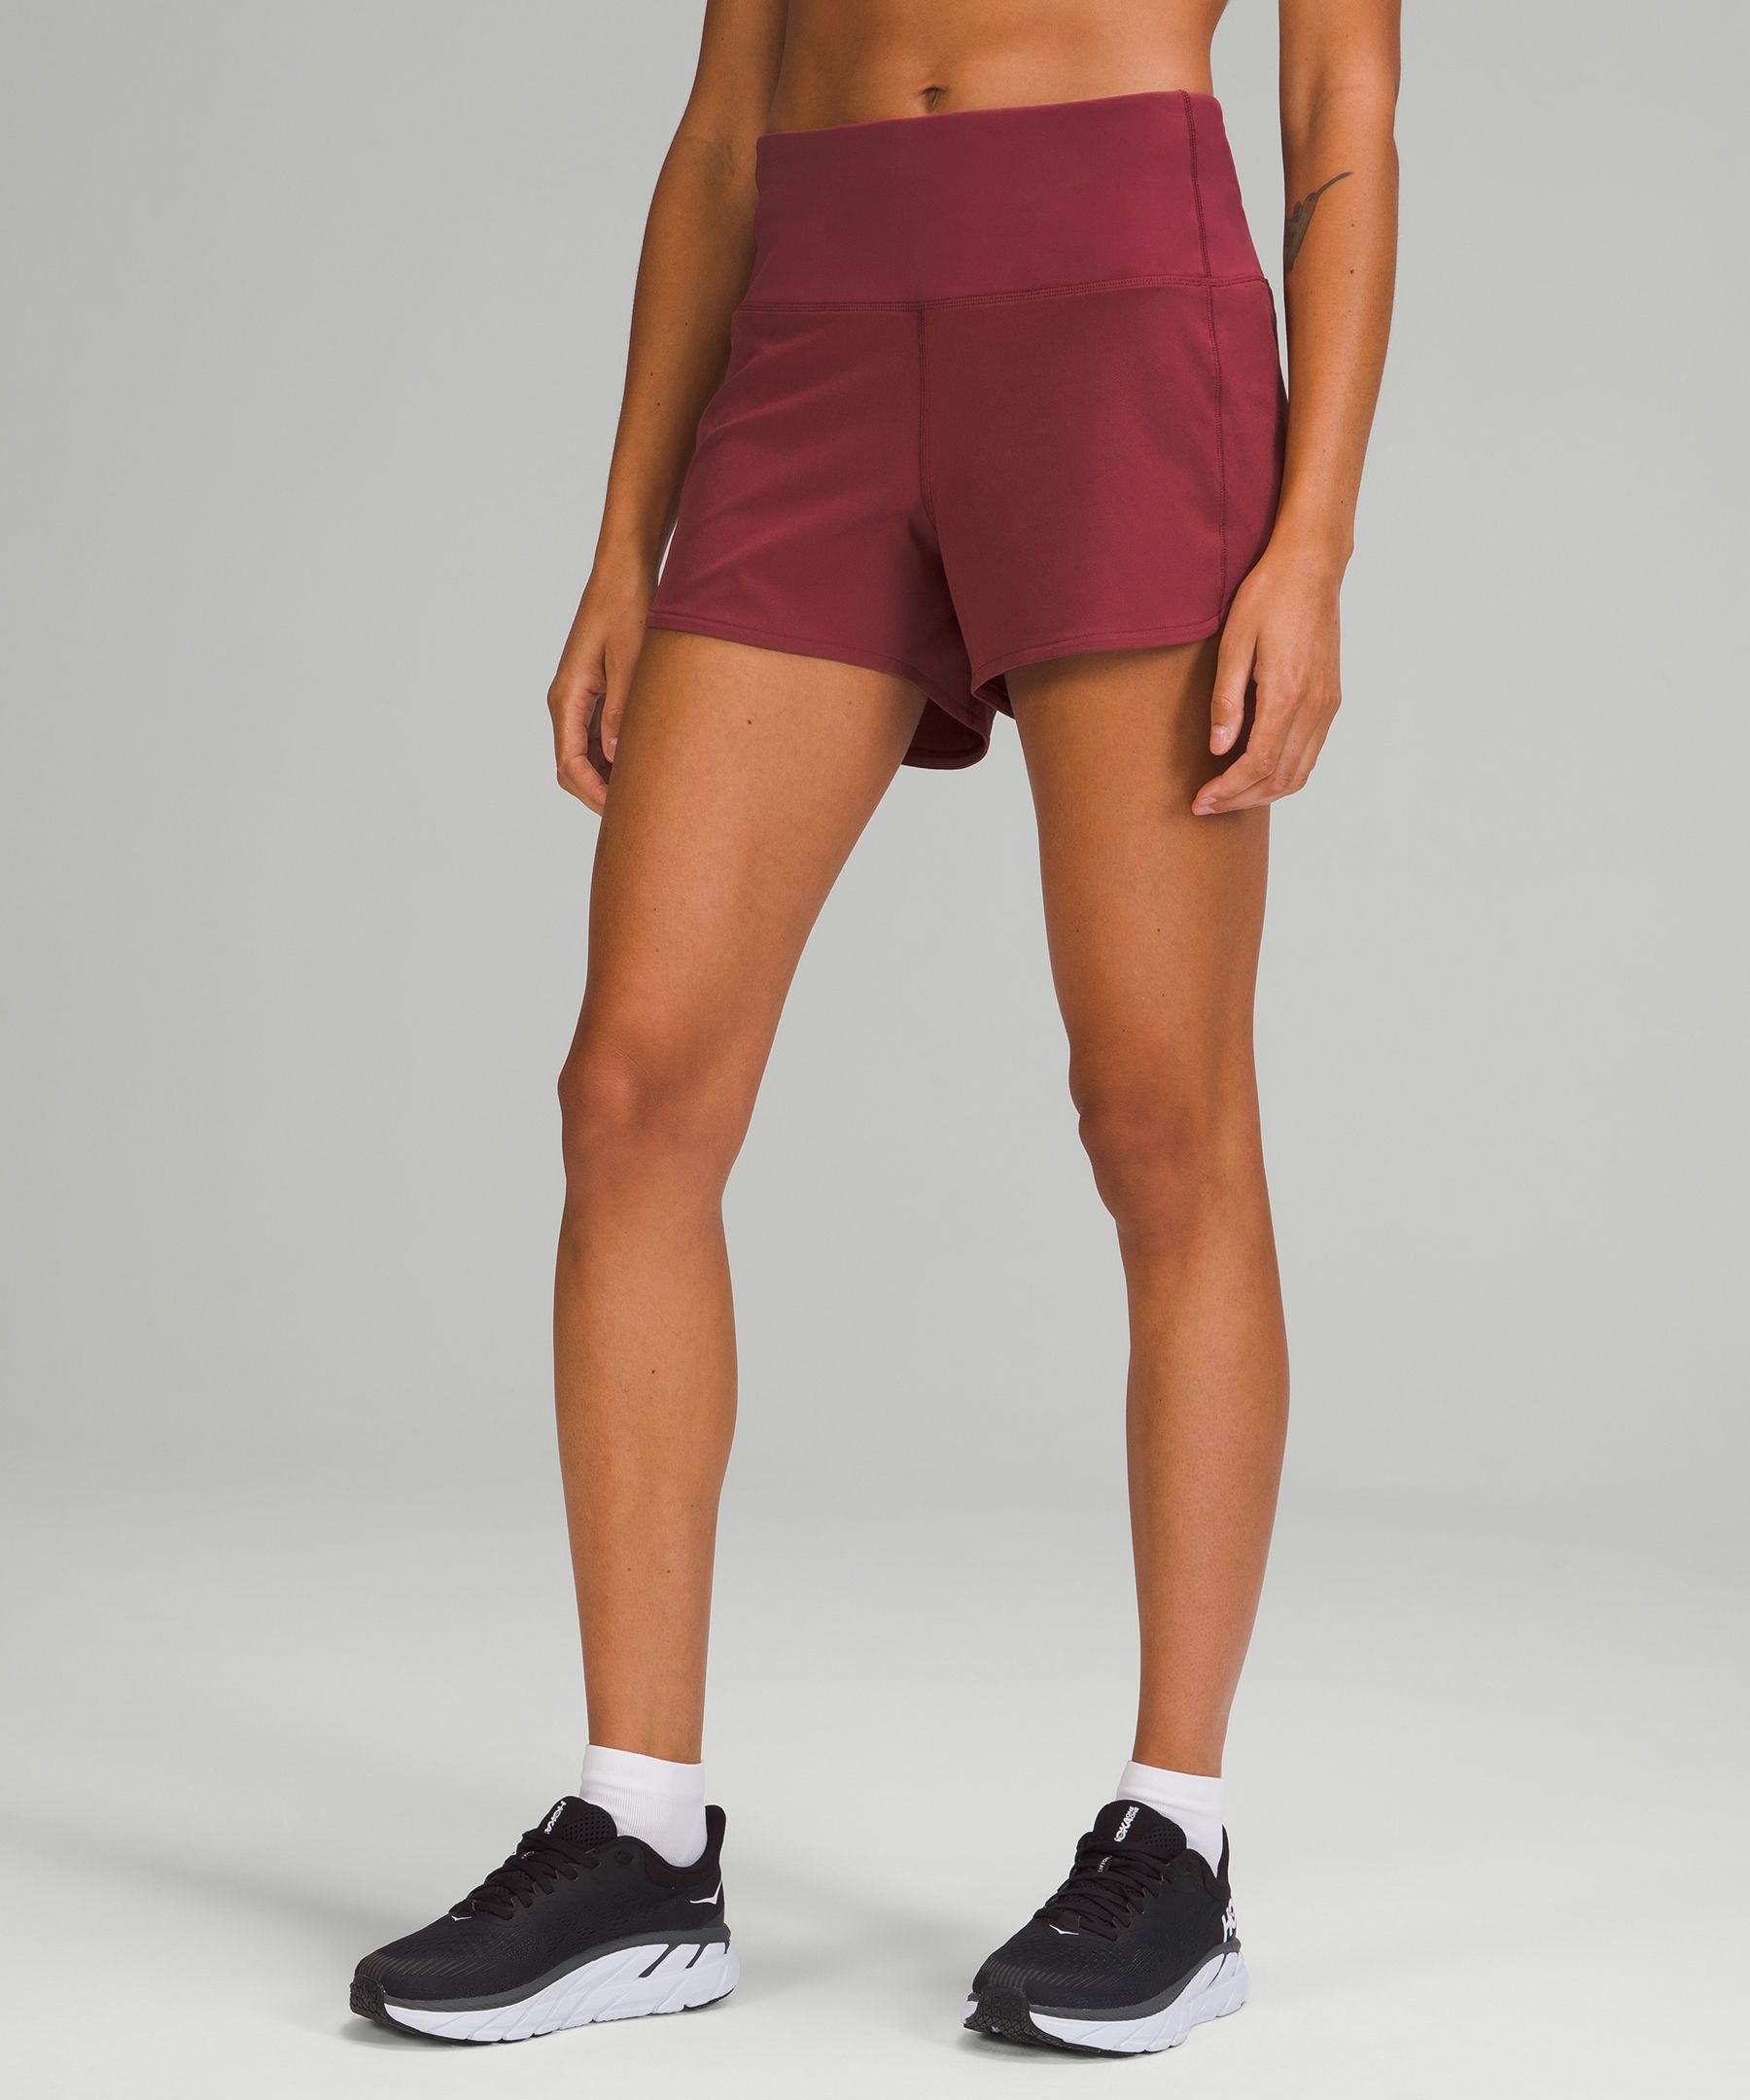 Lululemon Align™ High-rise Shorts With Pockets 8 - Mulled Wine